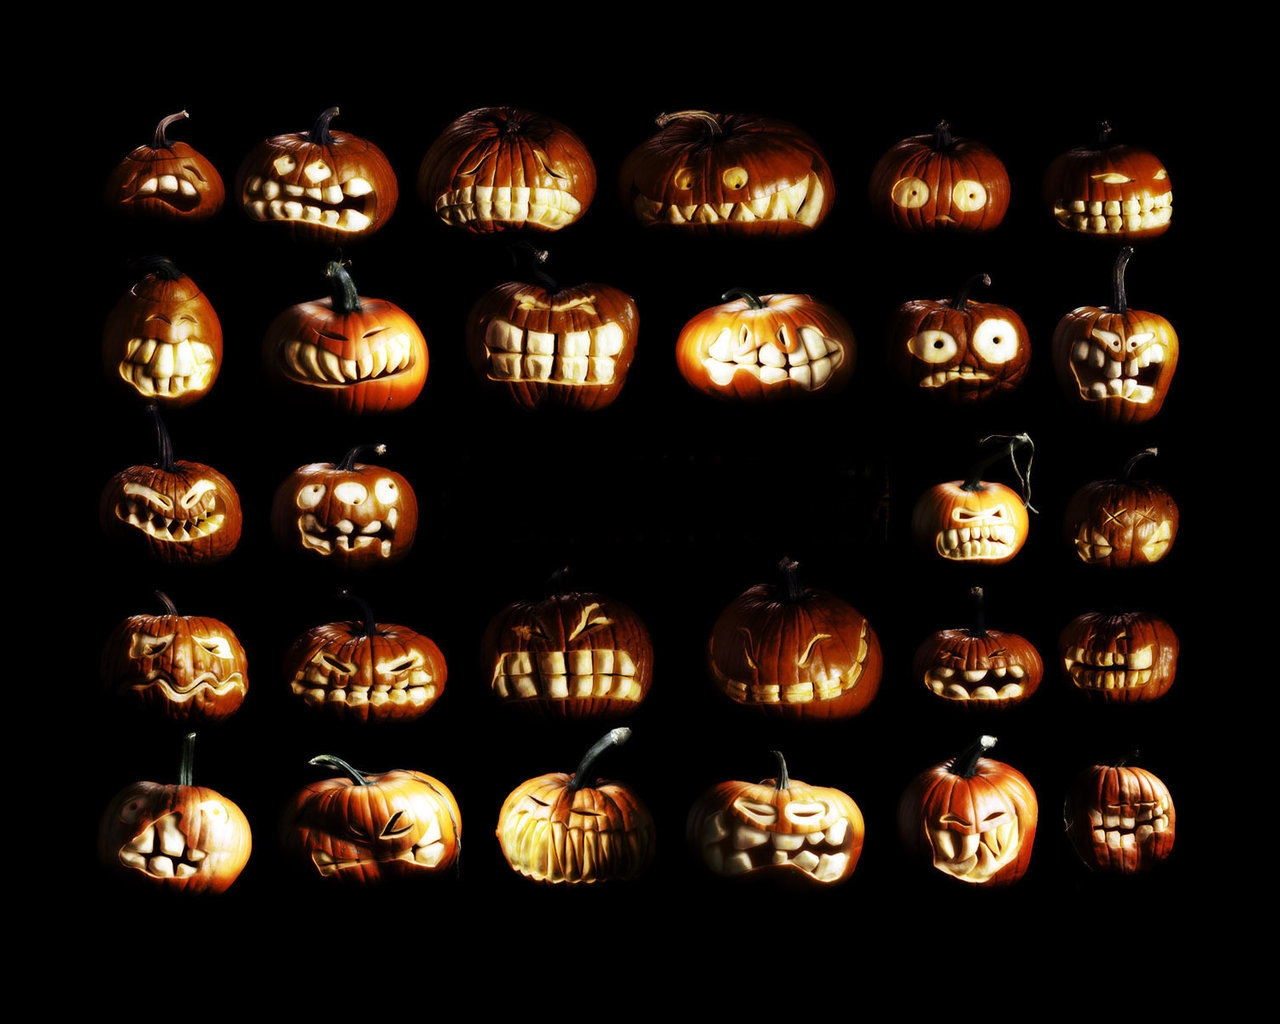 Pumpkin figures for Halloween for 1280 x 1024 resolution